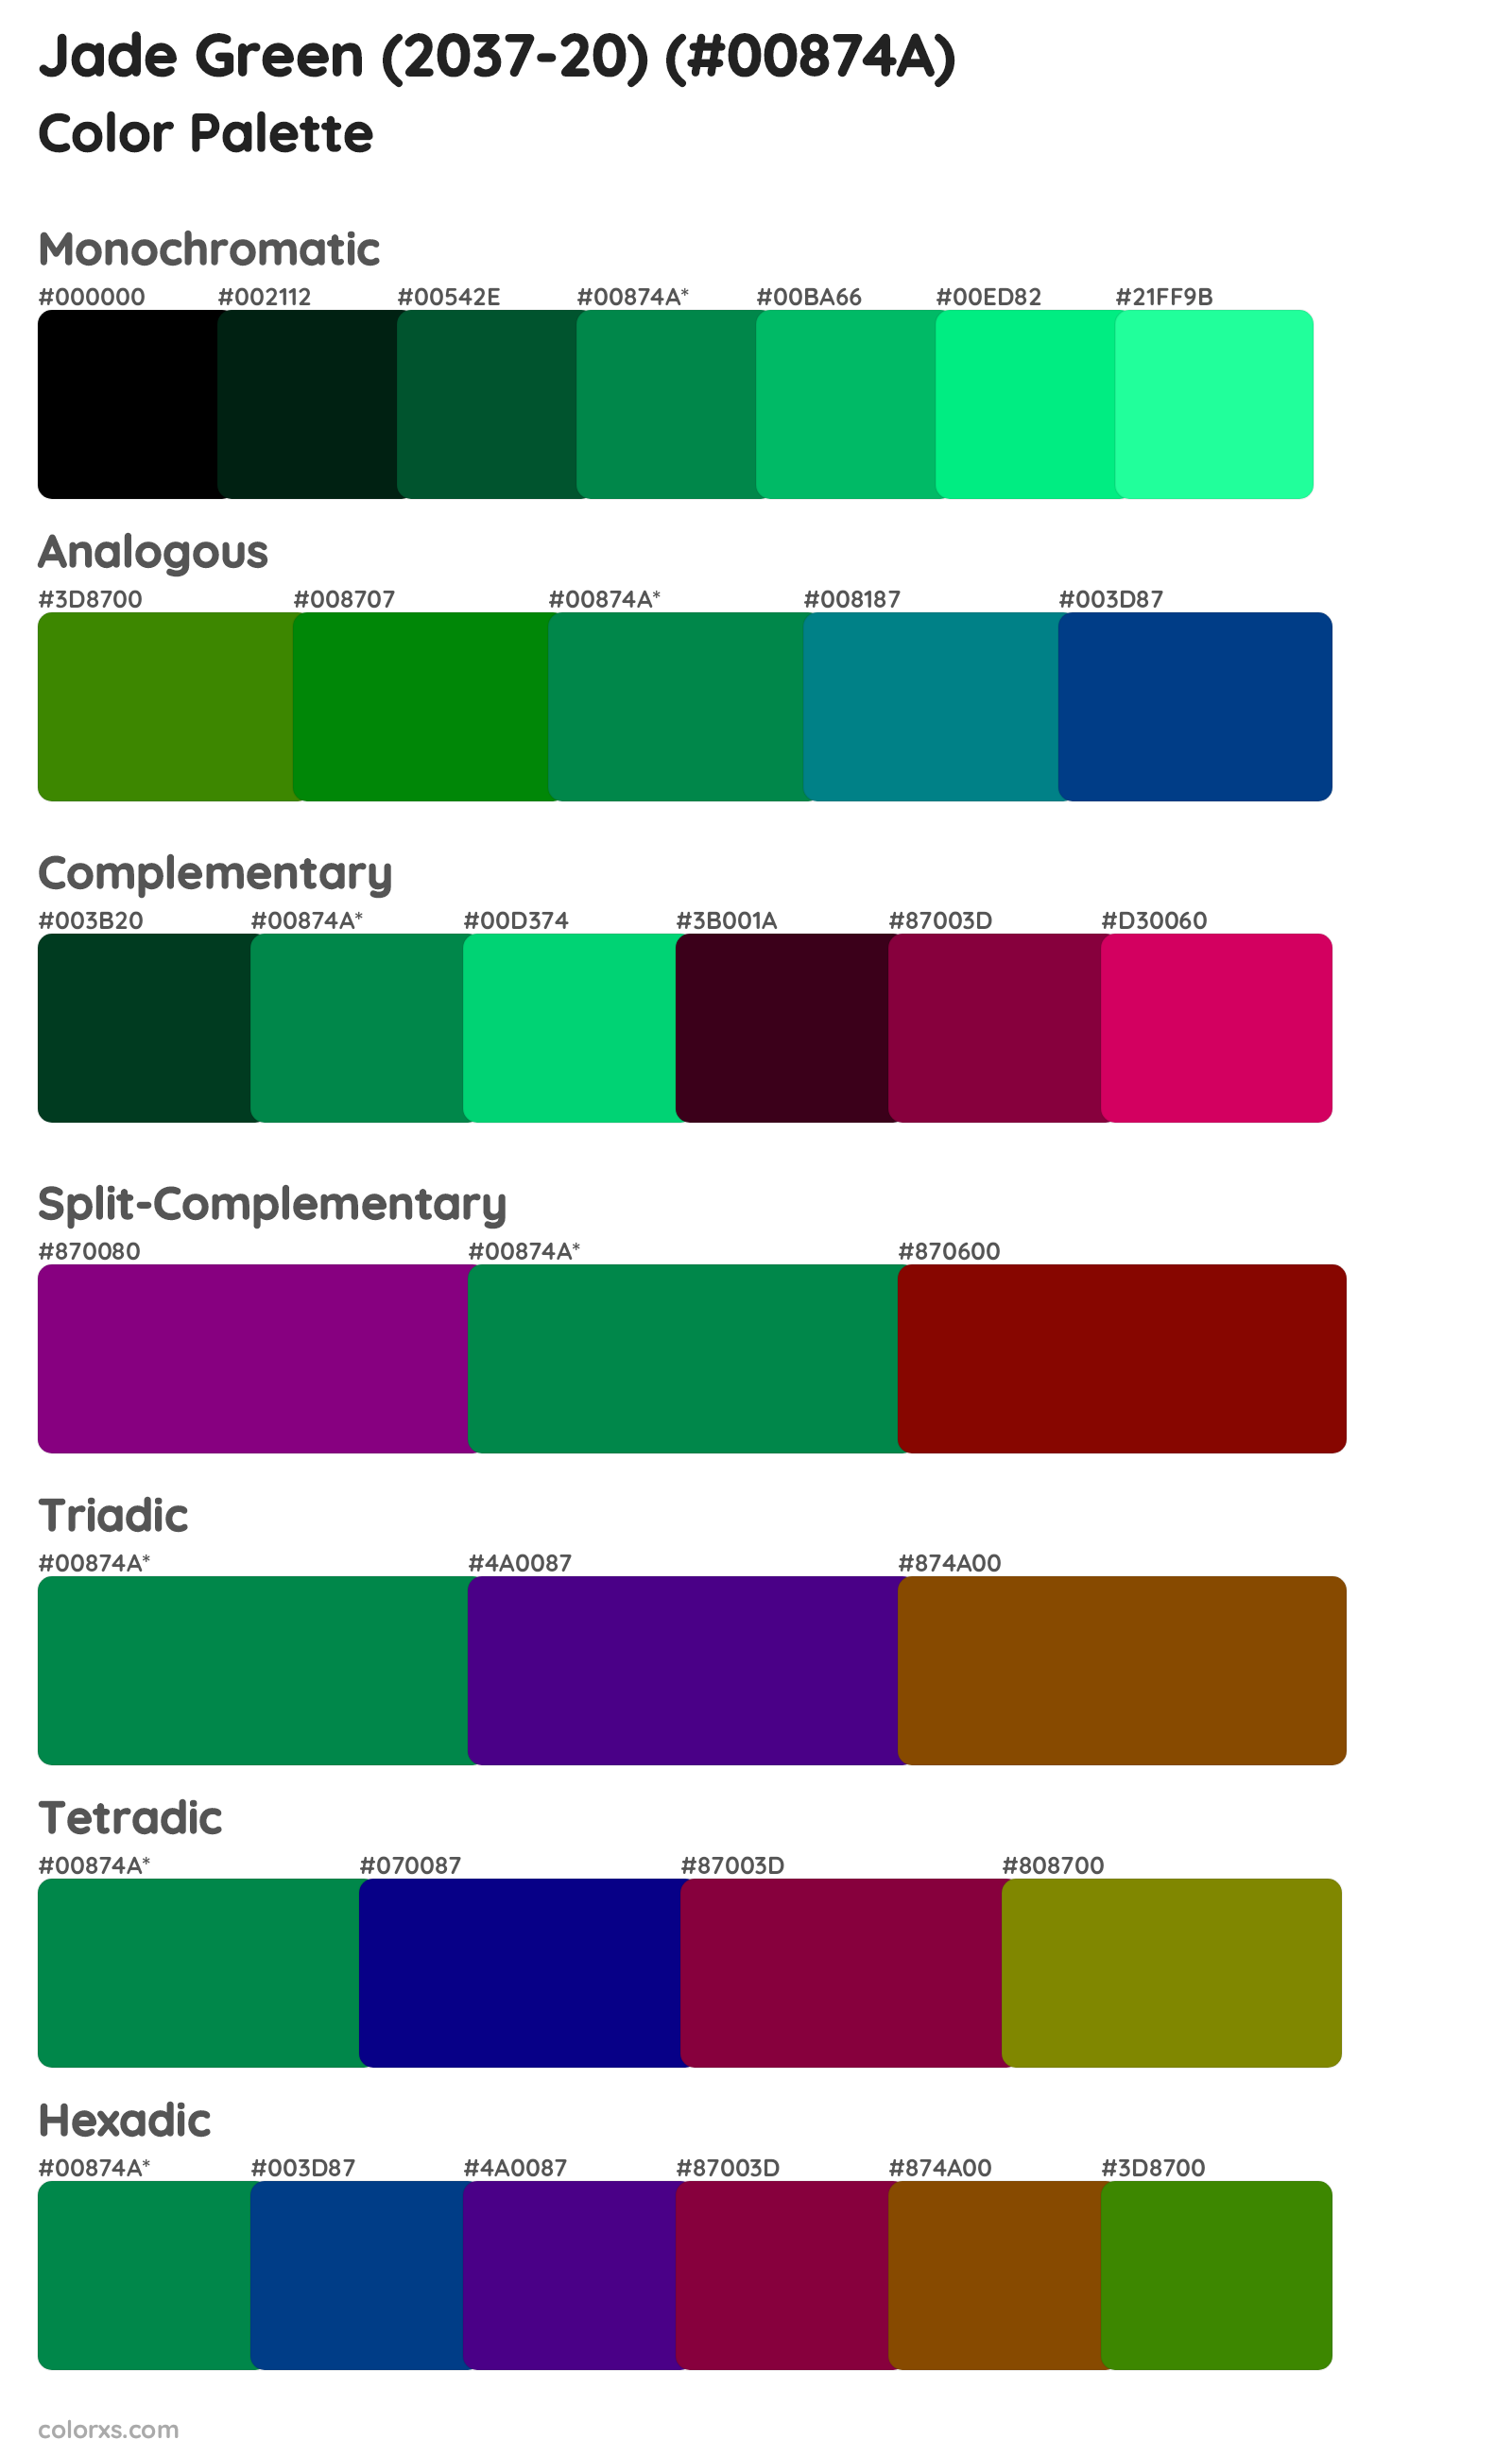 Jade Green (2037-20) Color Scheme Palettes